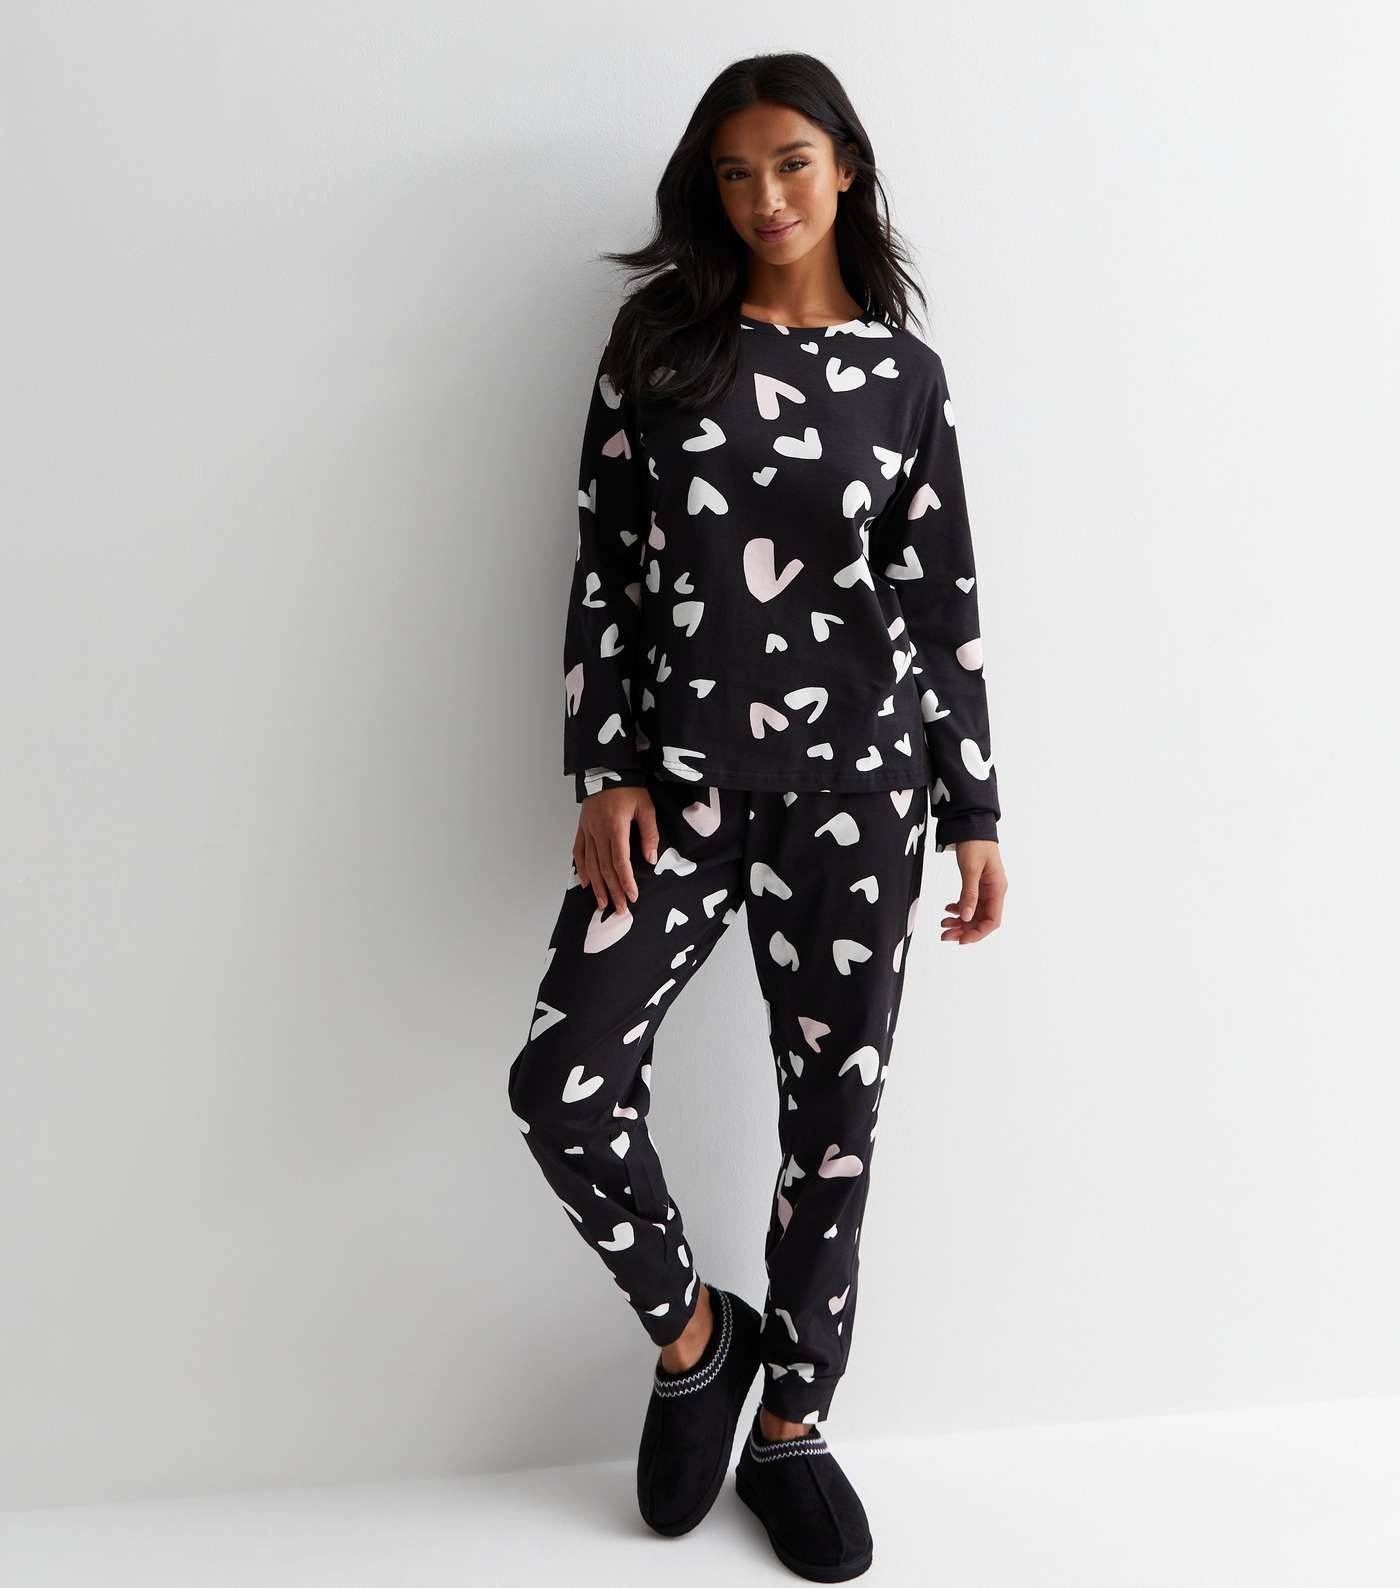 Petite Black Jogger Pyjama Set with Heart Print Image 3